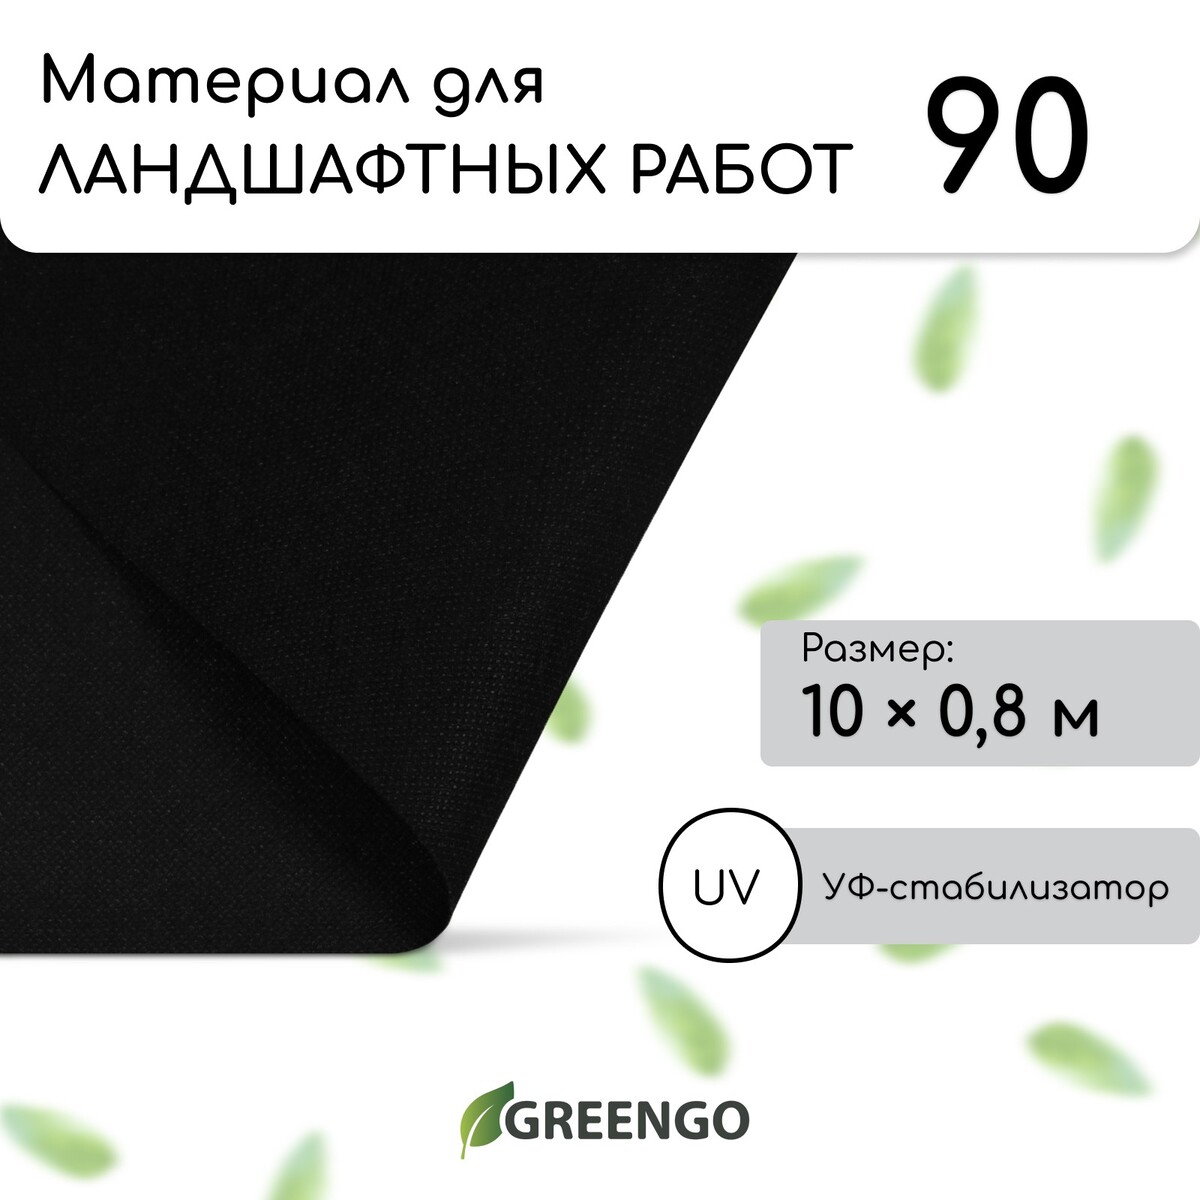    , 10   0, 8 ,  90 / ,   -, , greengo,  20%